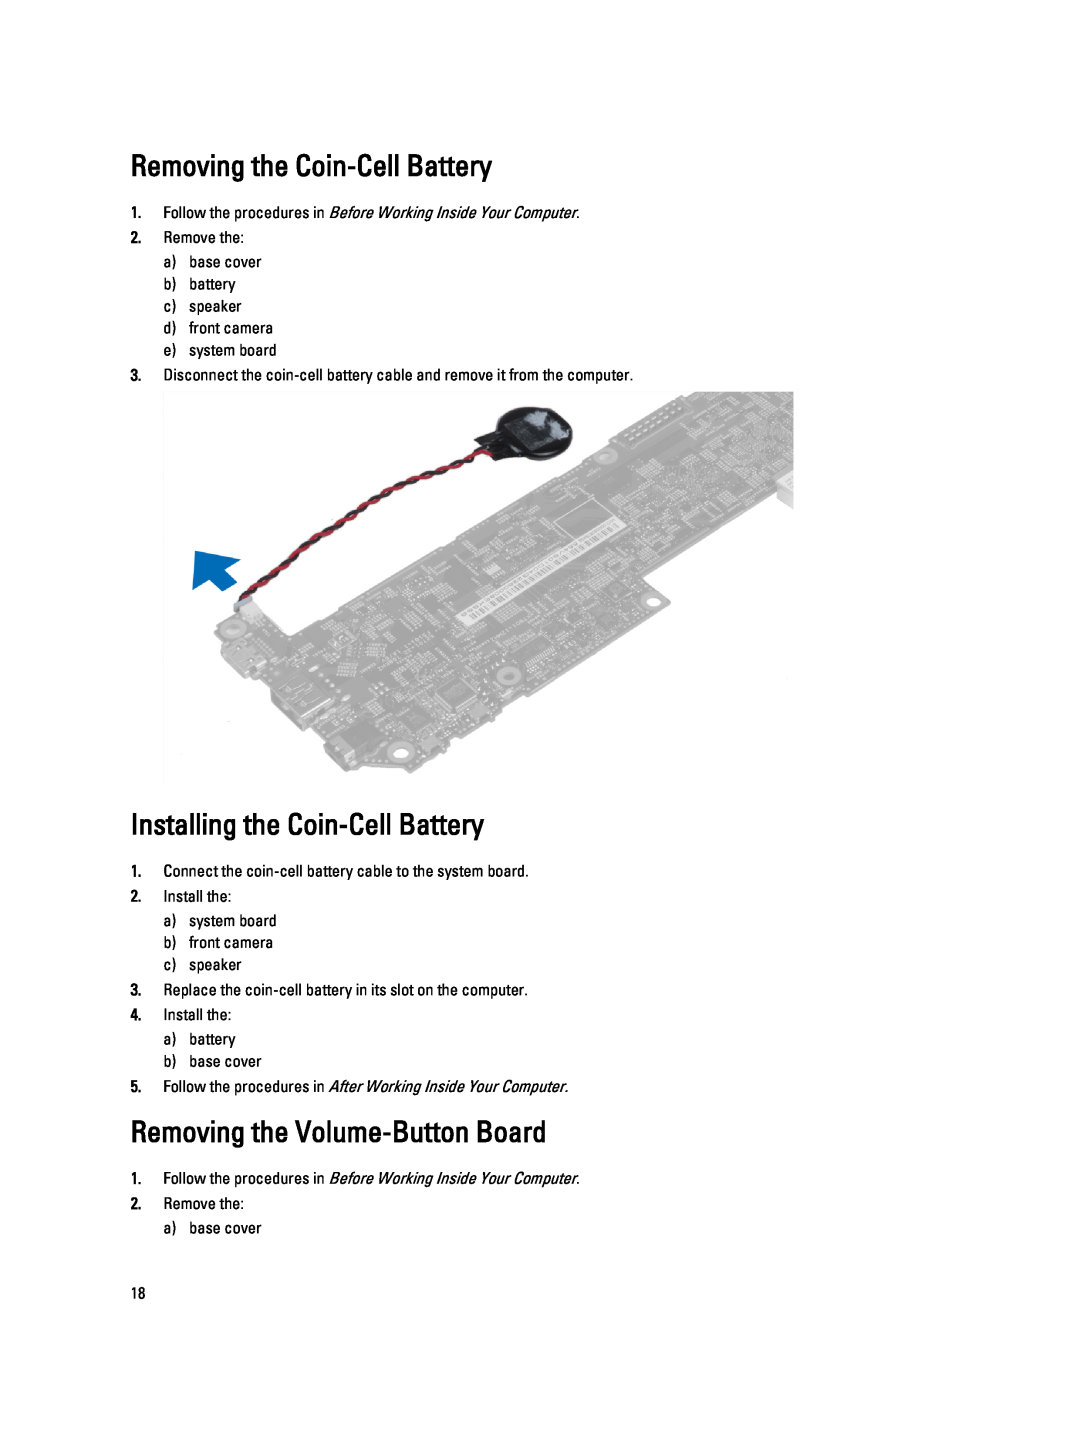 Dell 10-ST2E manual Removing the Coin-Cell Battery, Installing the Coin-Cell Battery, Removing the Volume-Button Board 